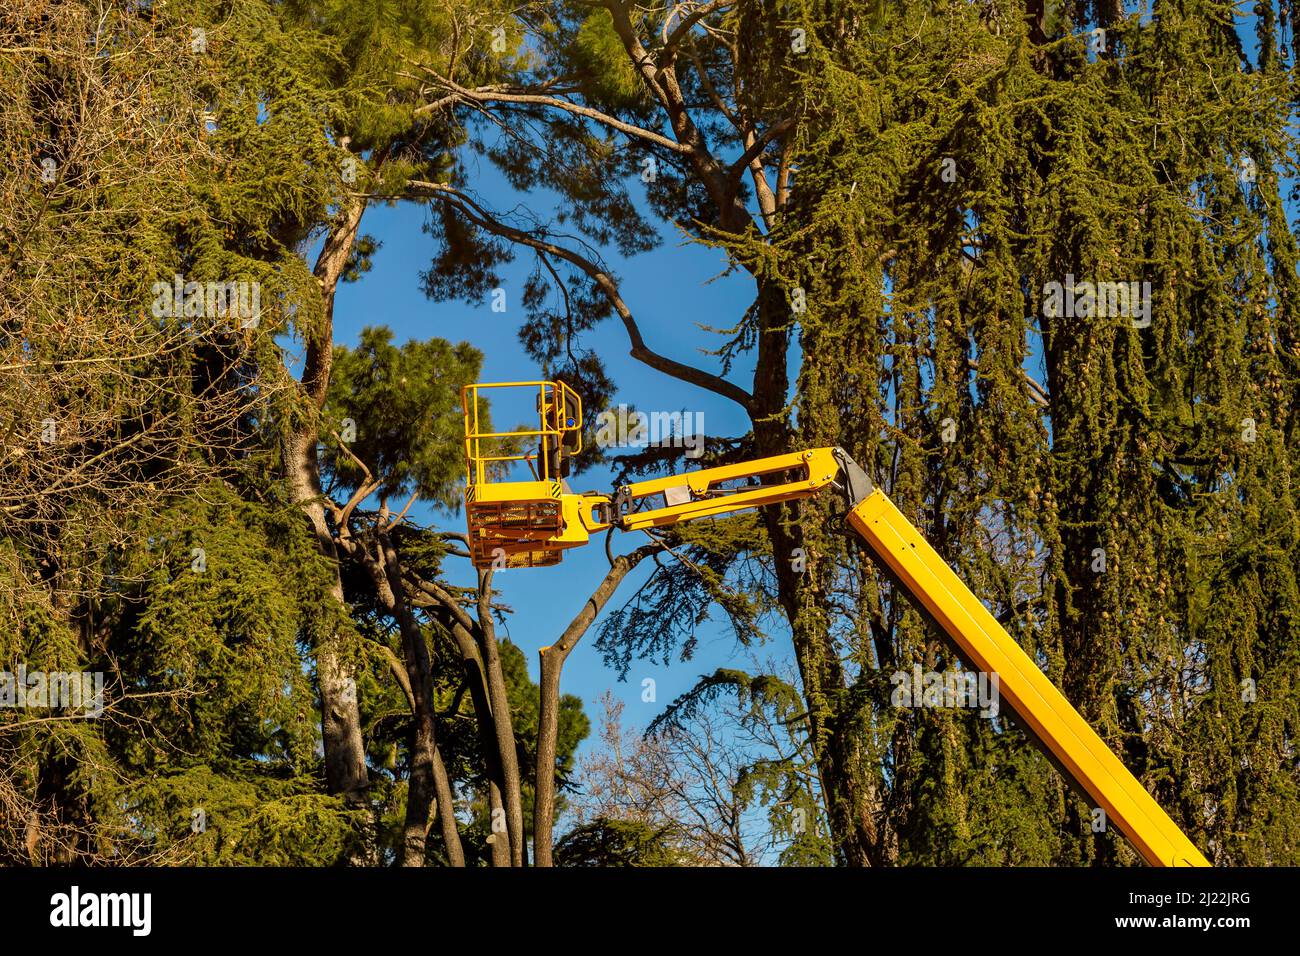 gardening machinery for pruning trees Stock Photo